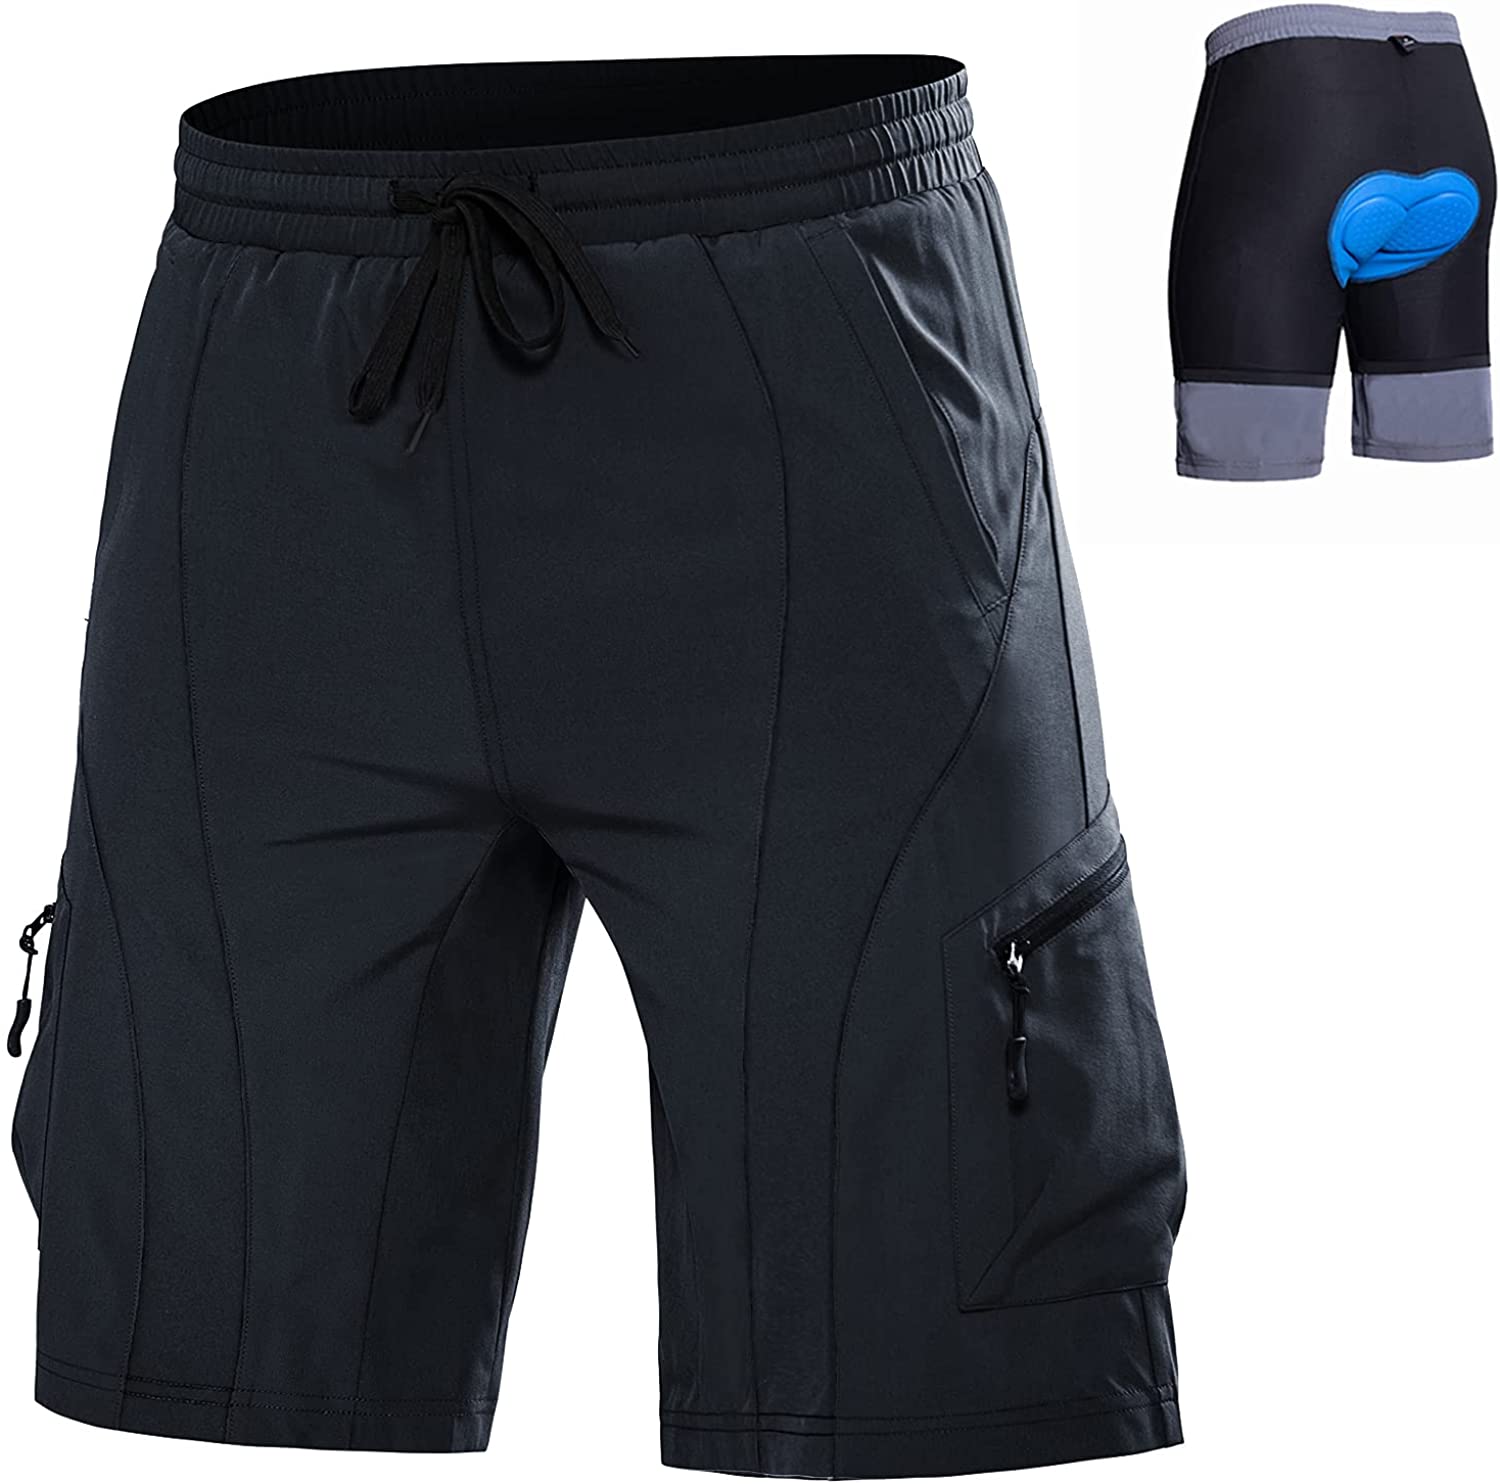 Hiauspor Men's-Mountain-Bike-Shorts-Padded-MTB-Cycling-Shorts-Loose-fi